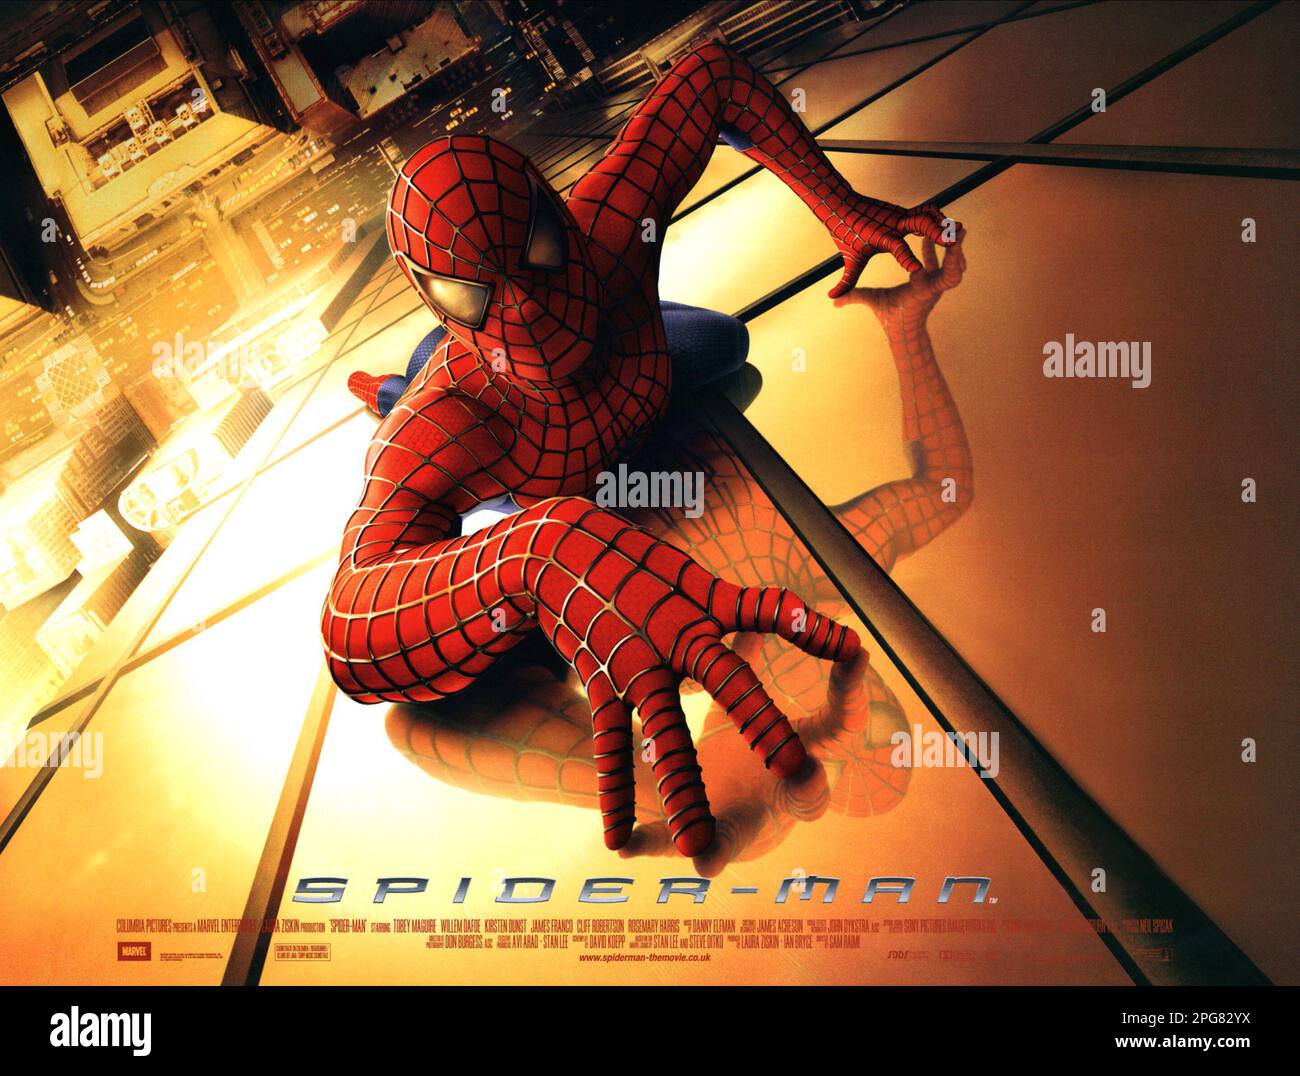 Spider-Man film poster Stock Photo